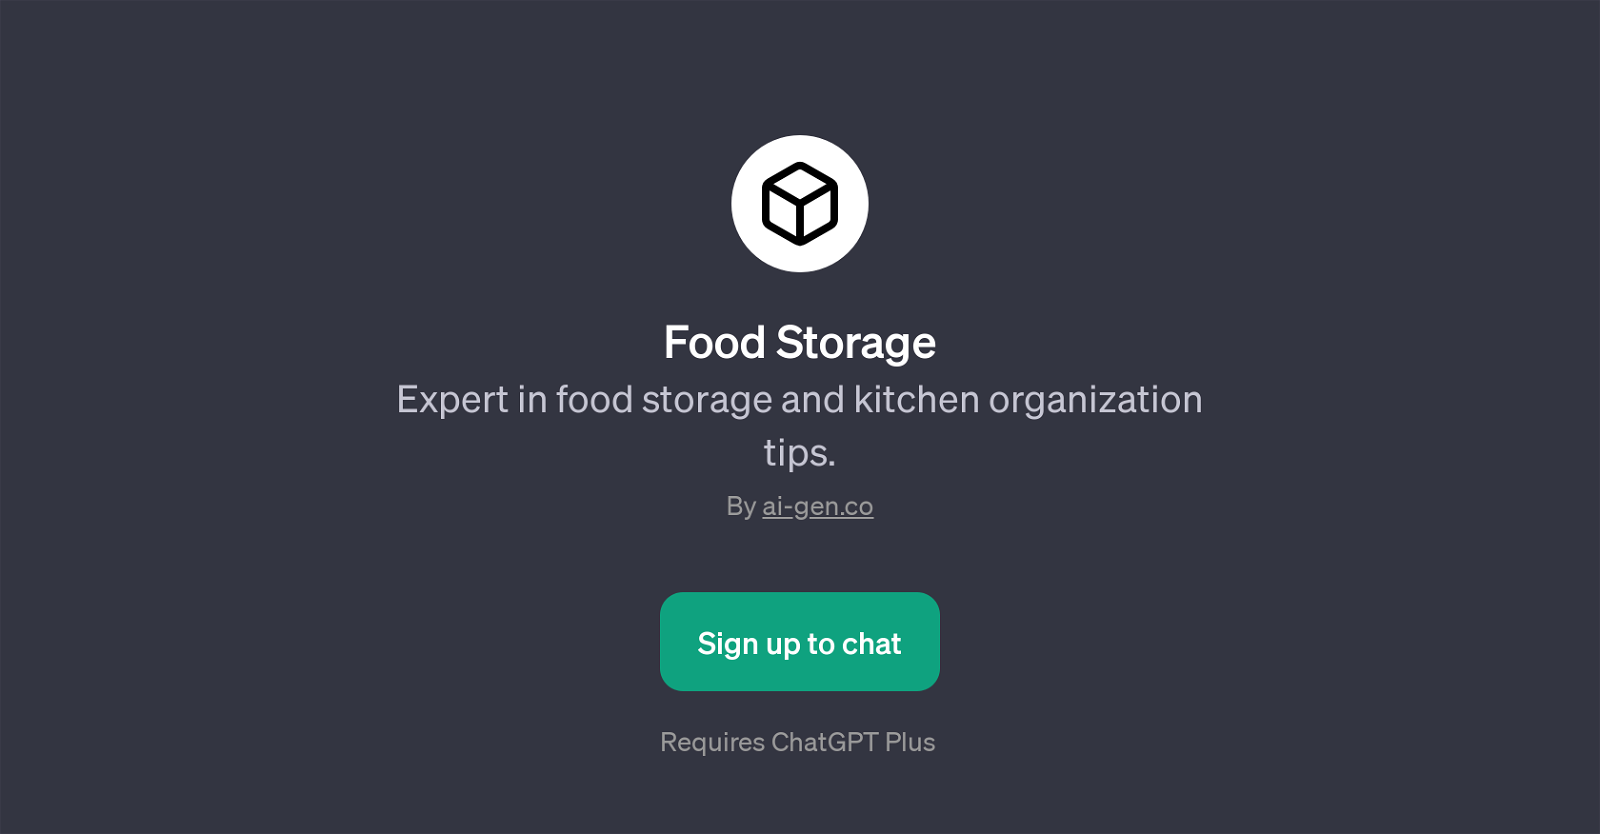 Food Storage website